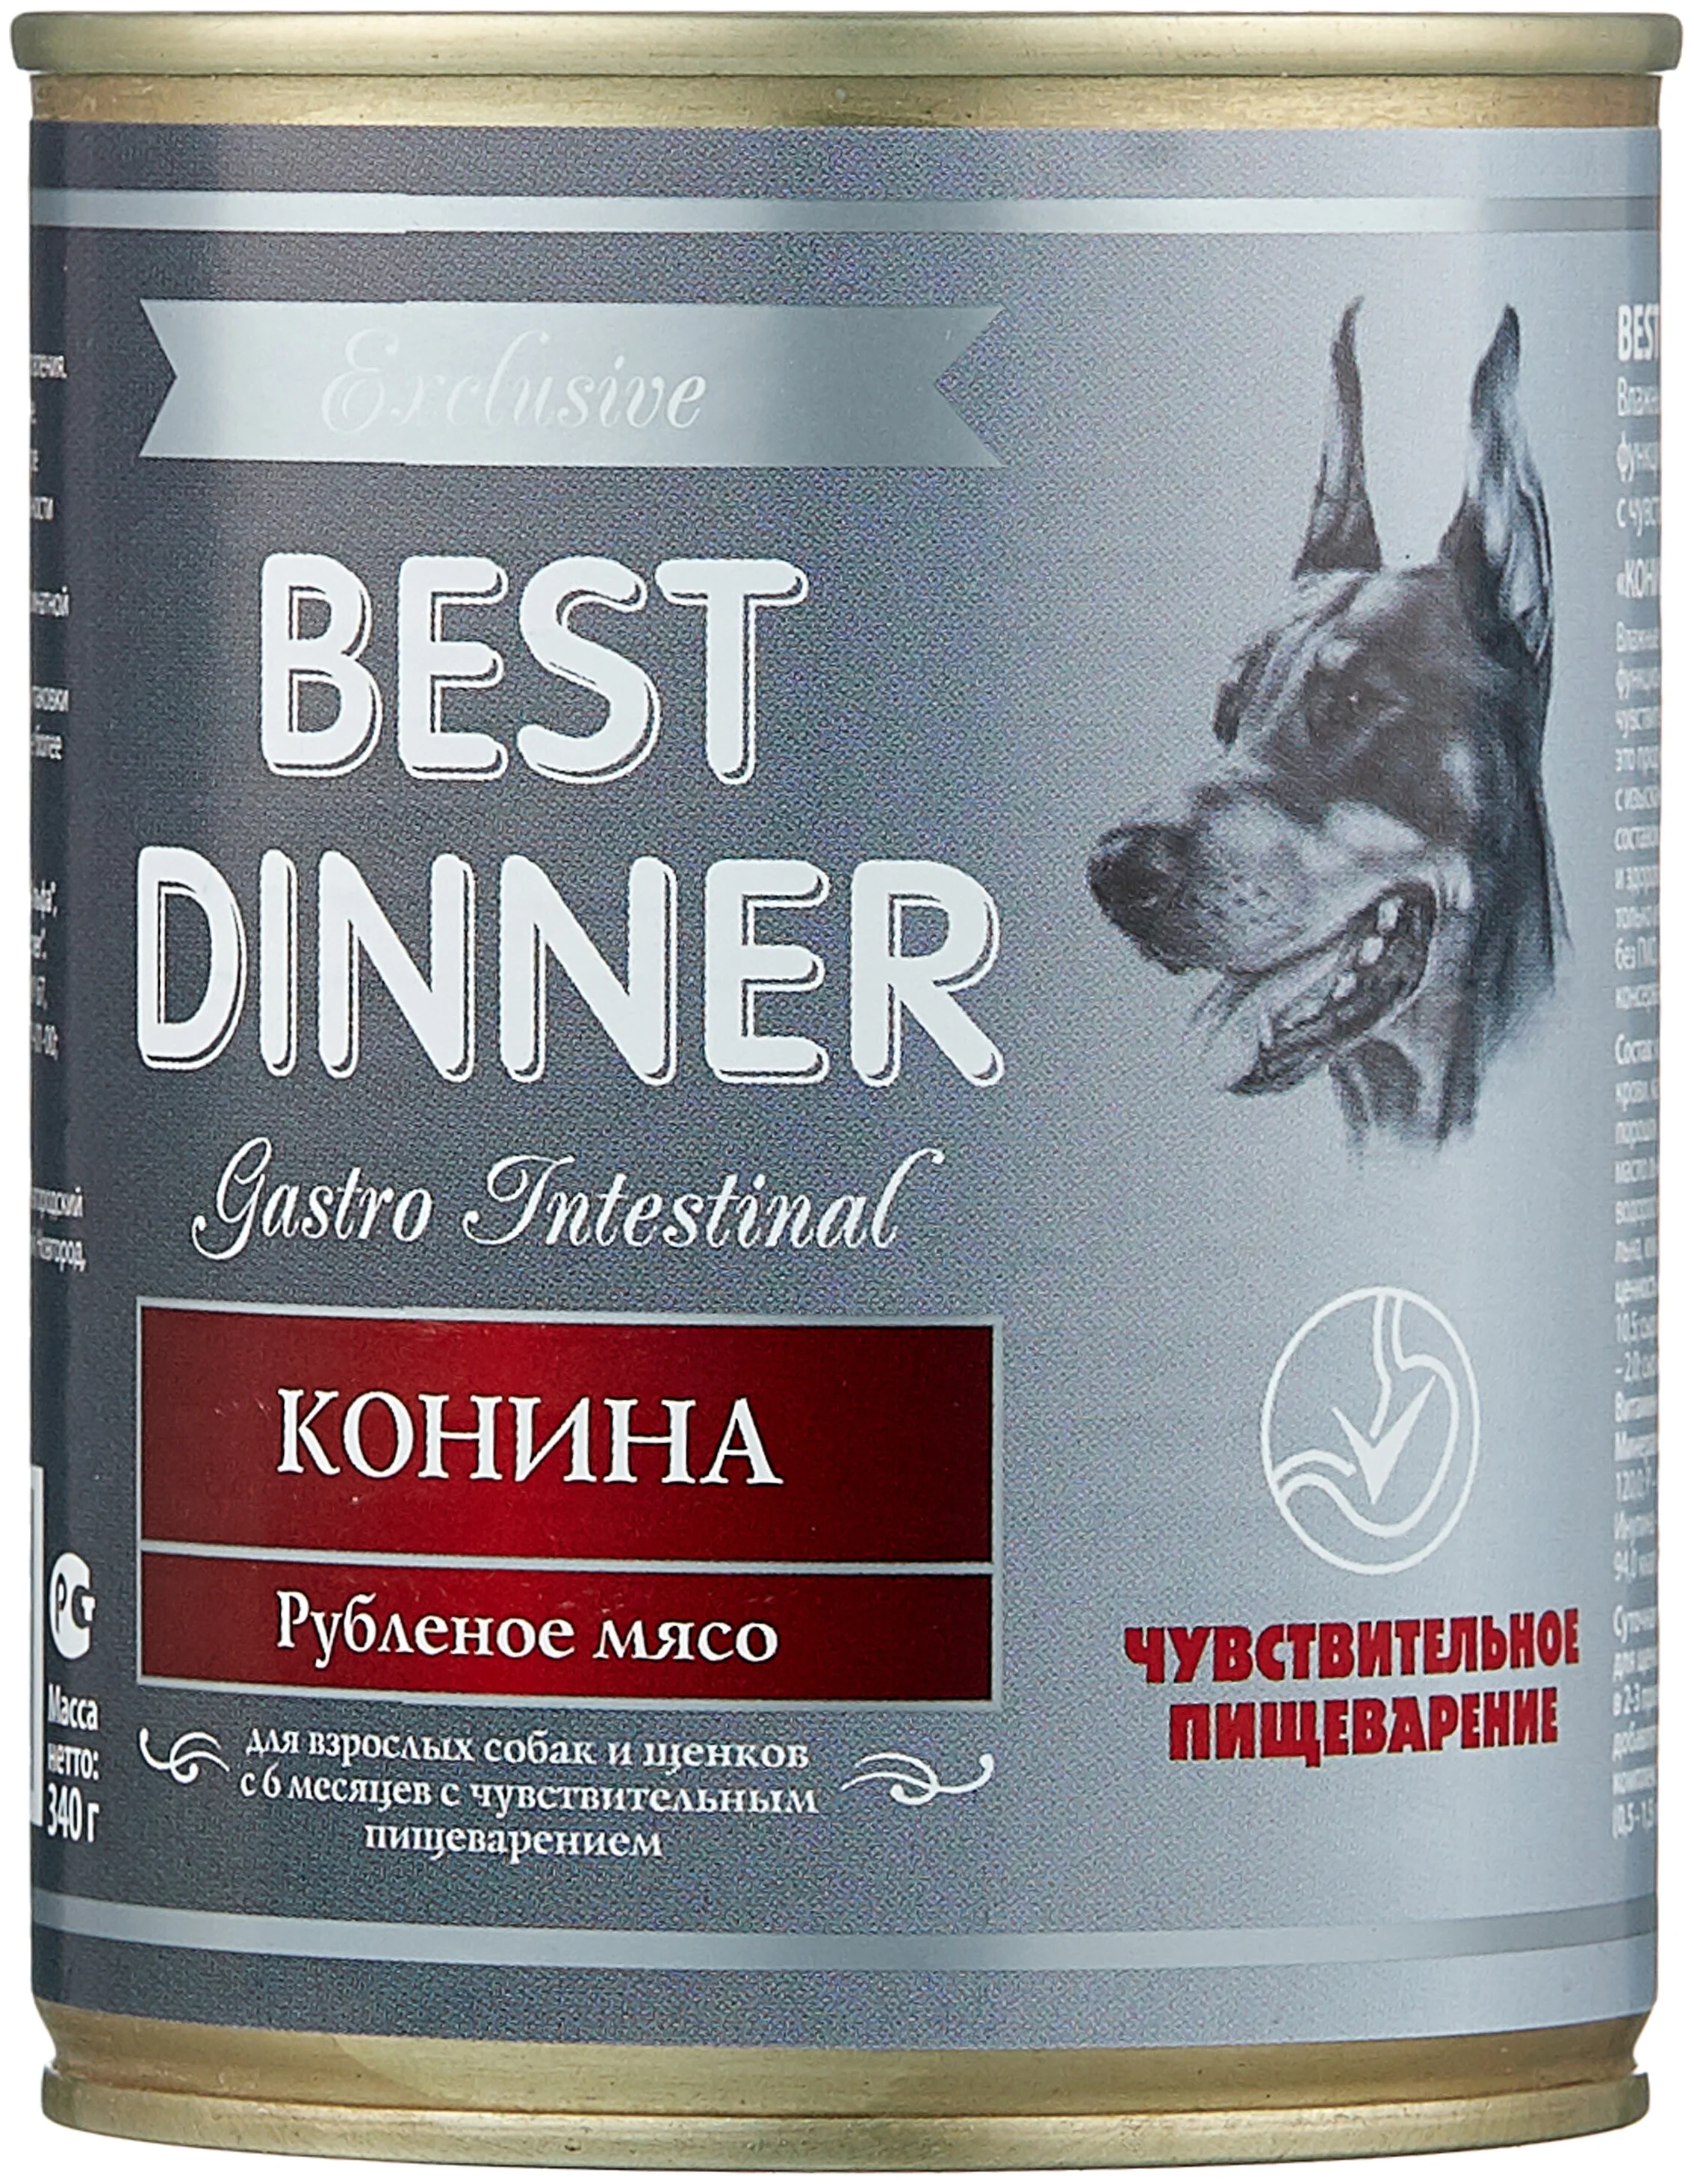 Best Dinner Exclusive Gastro Intestinal "Конина" - размер породы: все породы